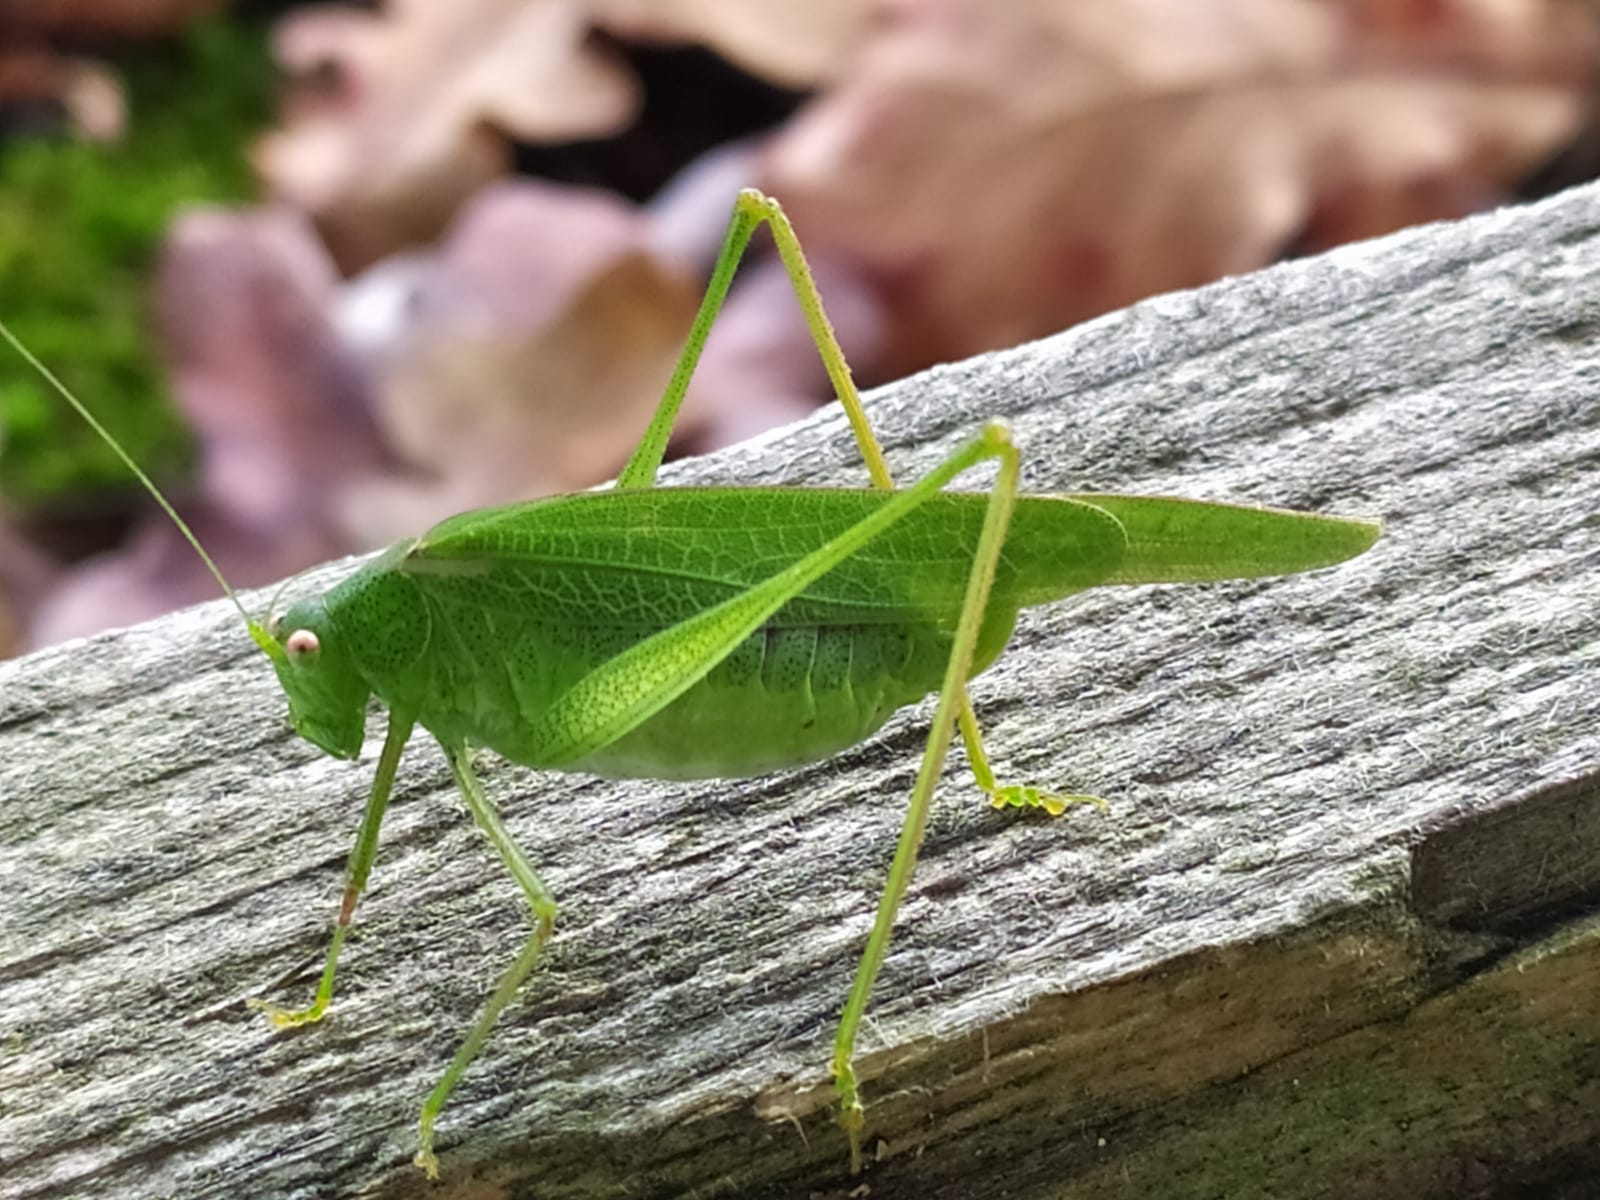 a close up of a green grasshopper